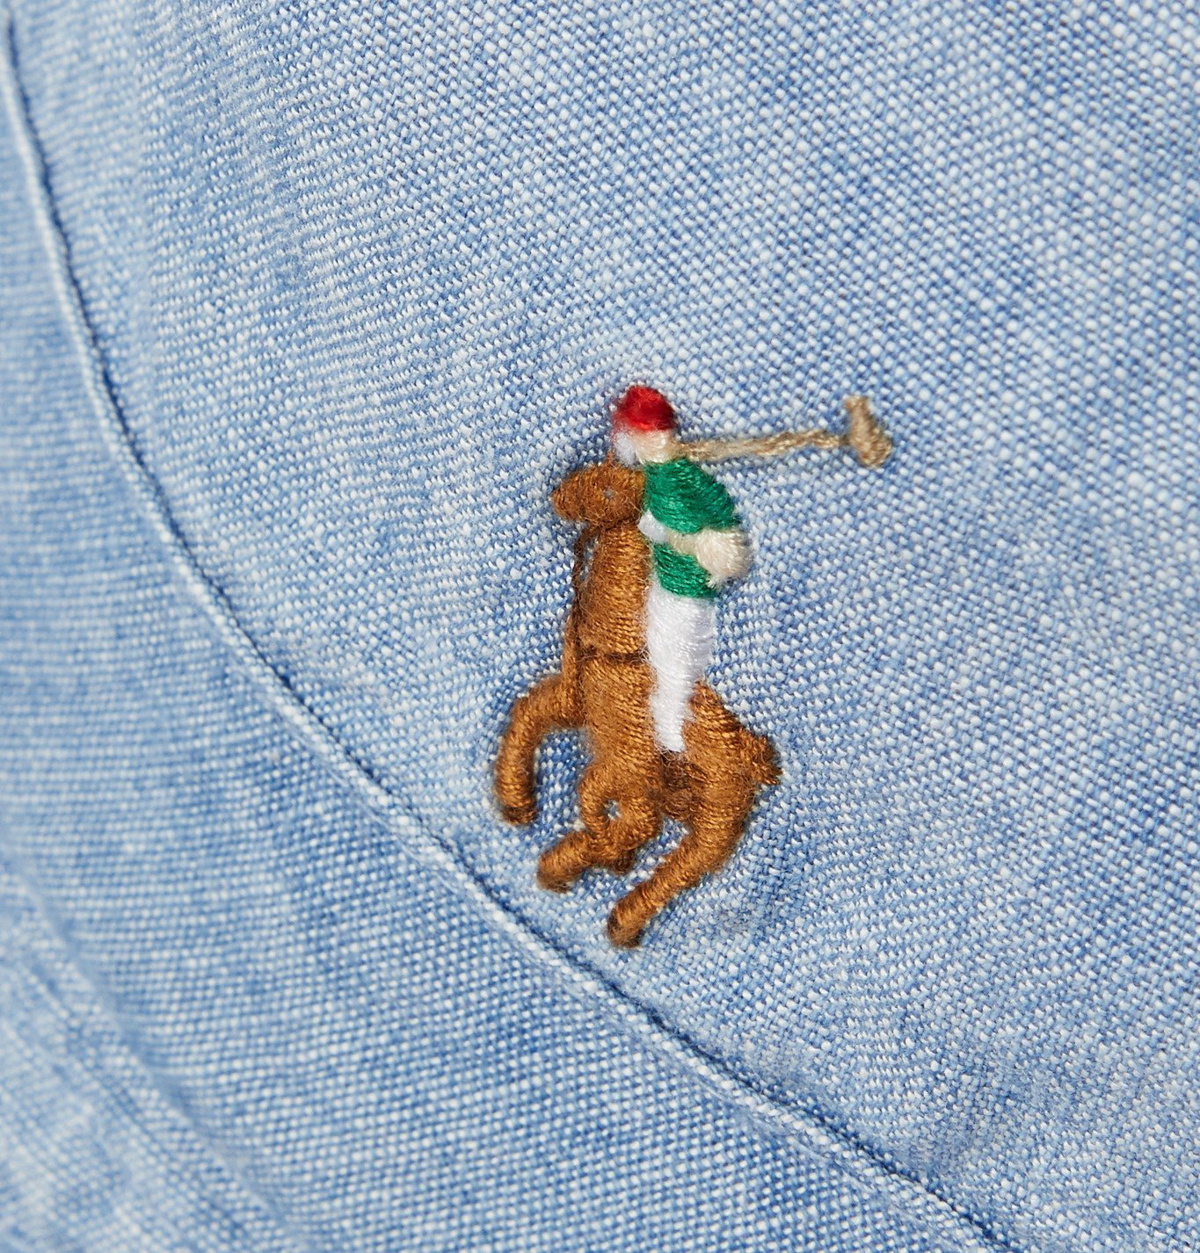 Polo Ralph Lauren - Loft Logo-Embroidered Cotton-Chambray Bucket Hat ...